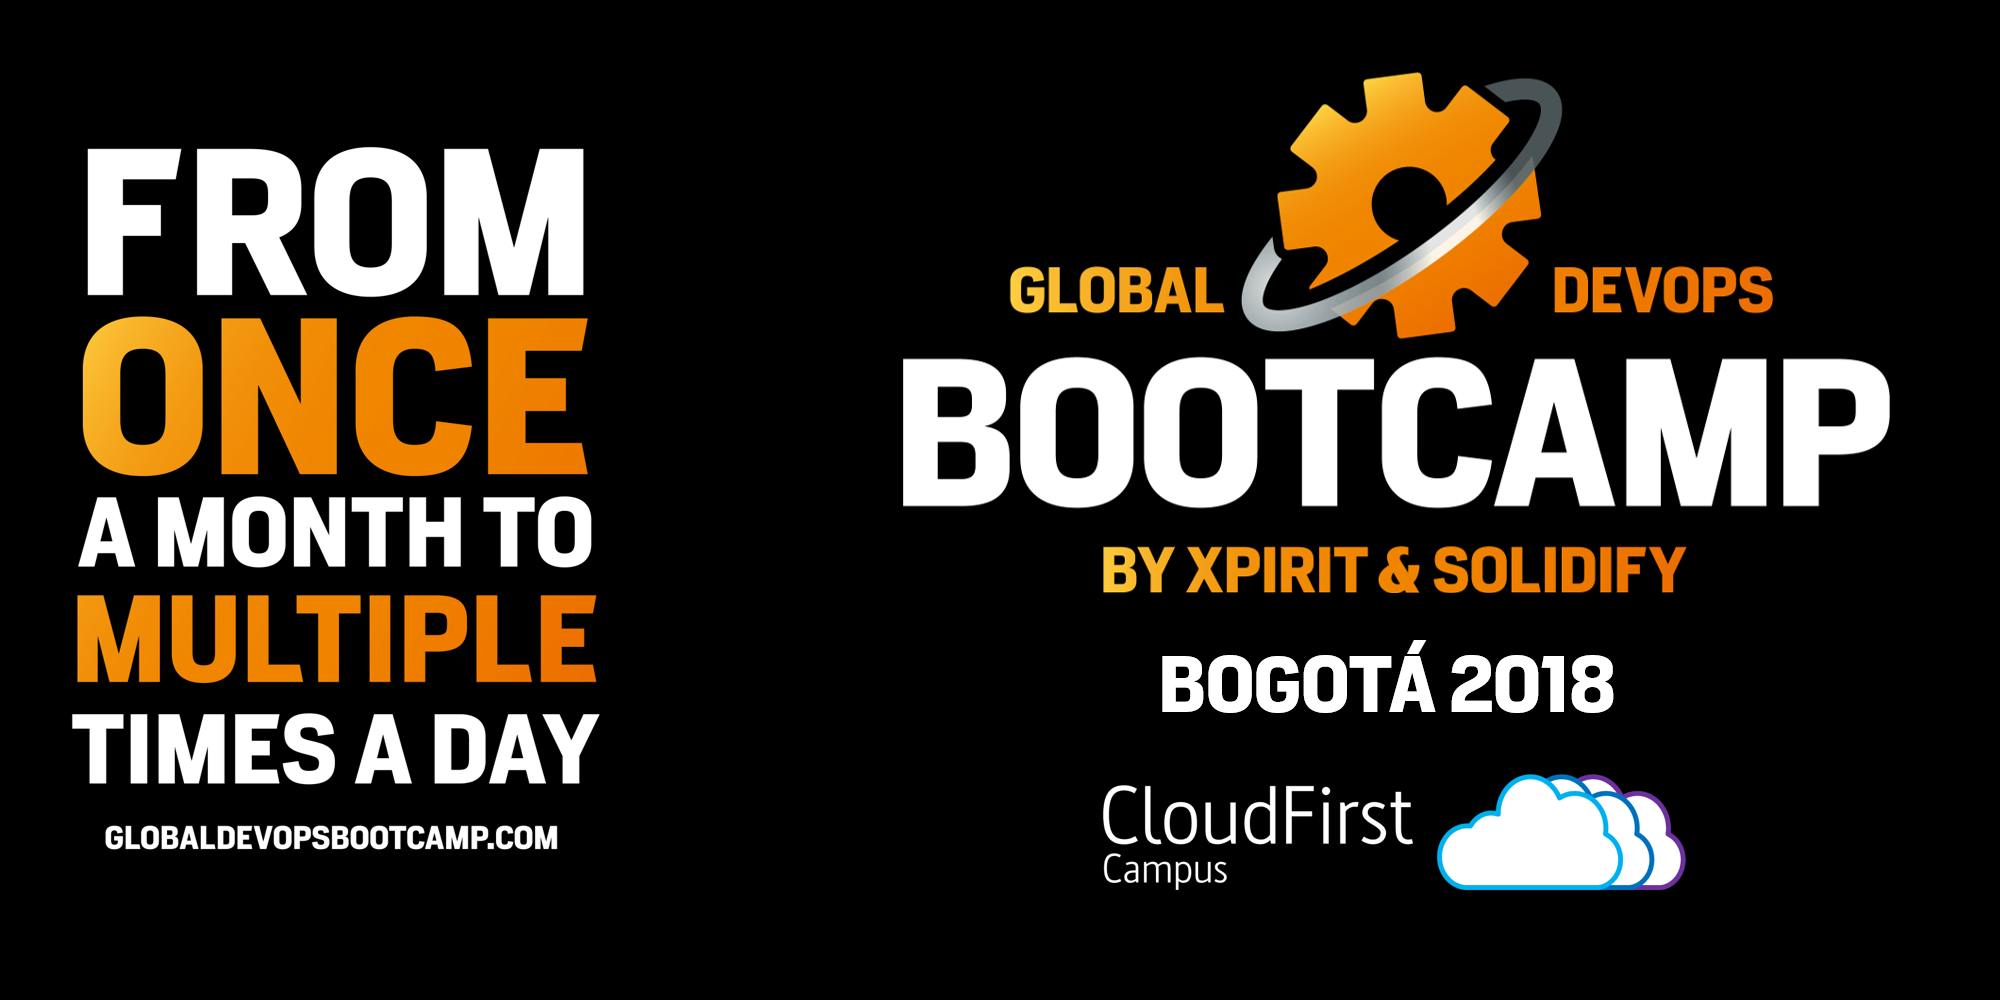 Global DevOps Bootcamp 2018 @ Bogotá - CloudFirst Campus